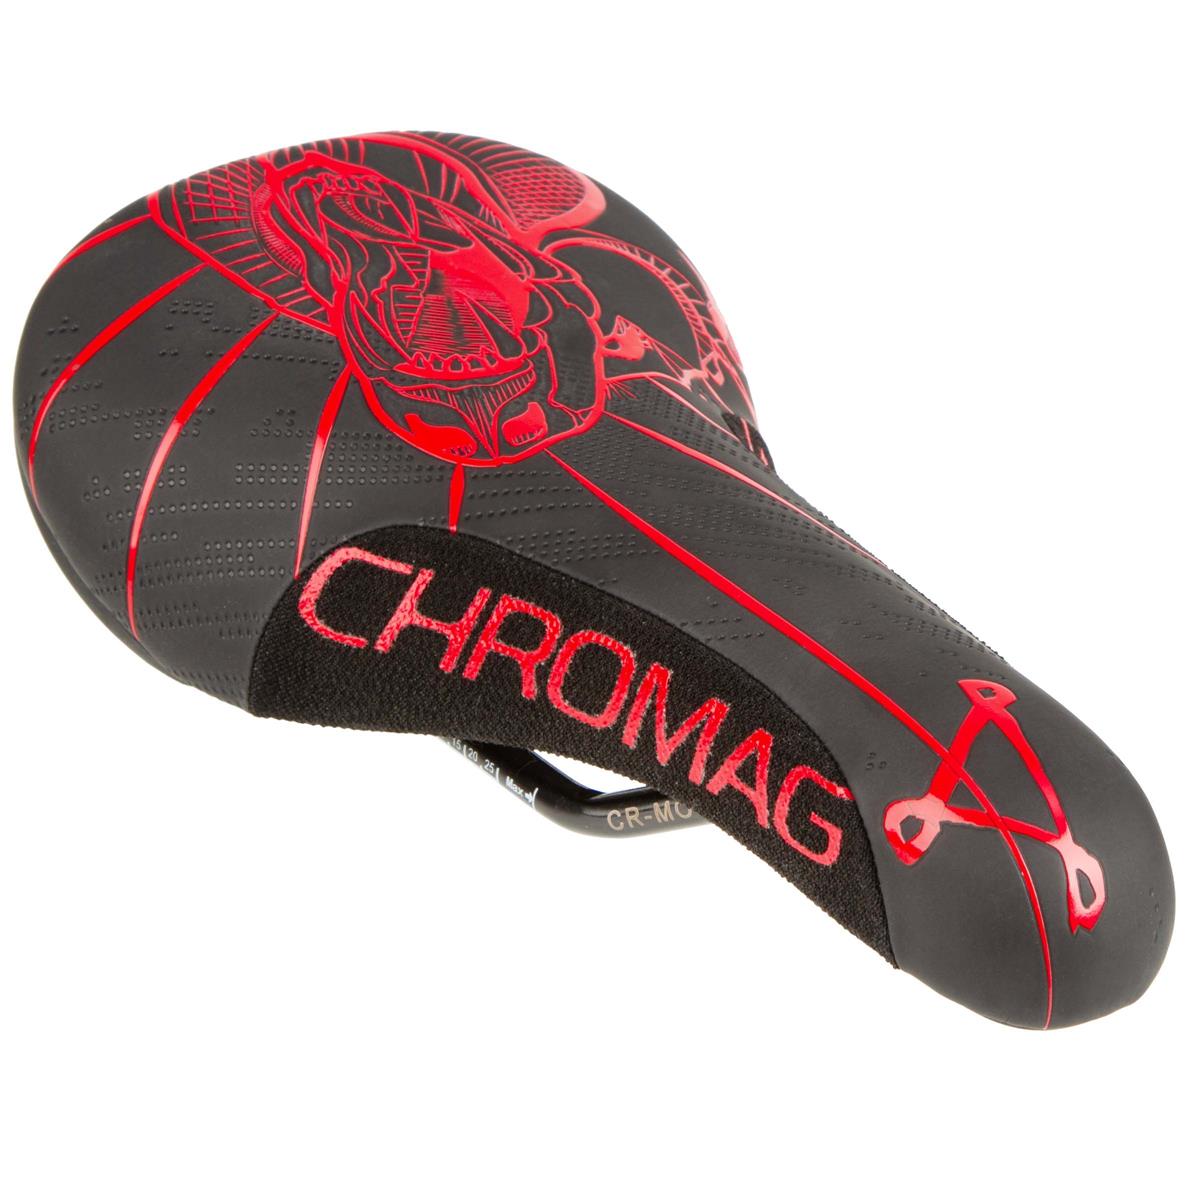 Chromag Saddle Overture 2019 243 x 136 mm, Black/Red